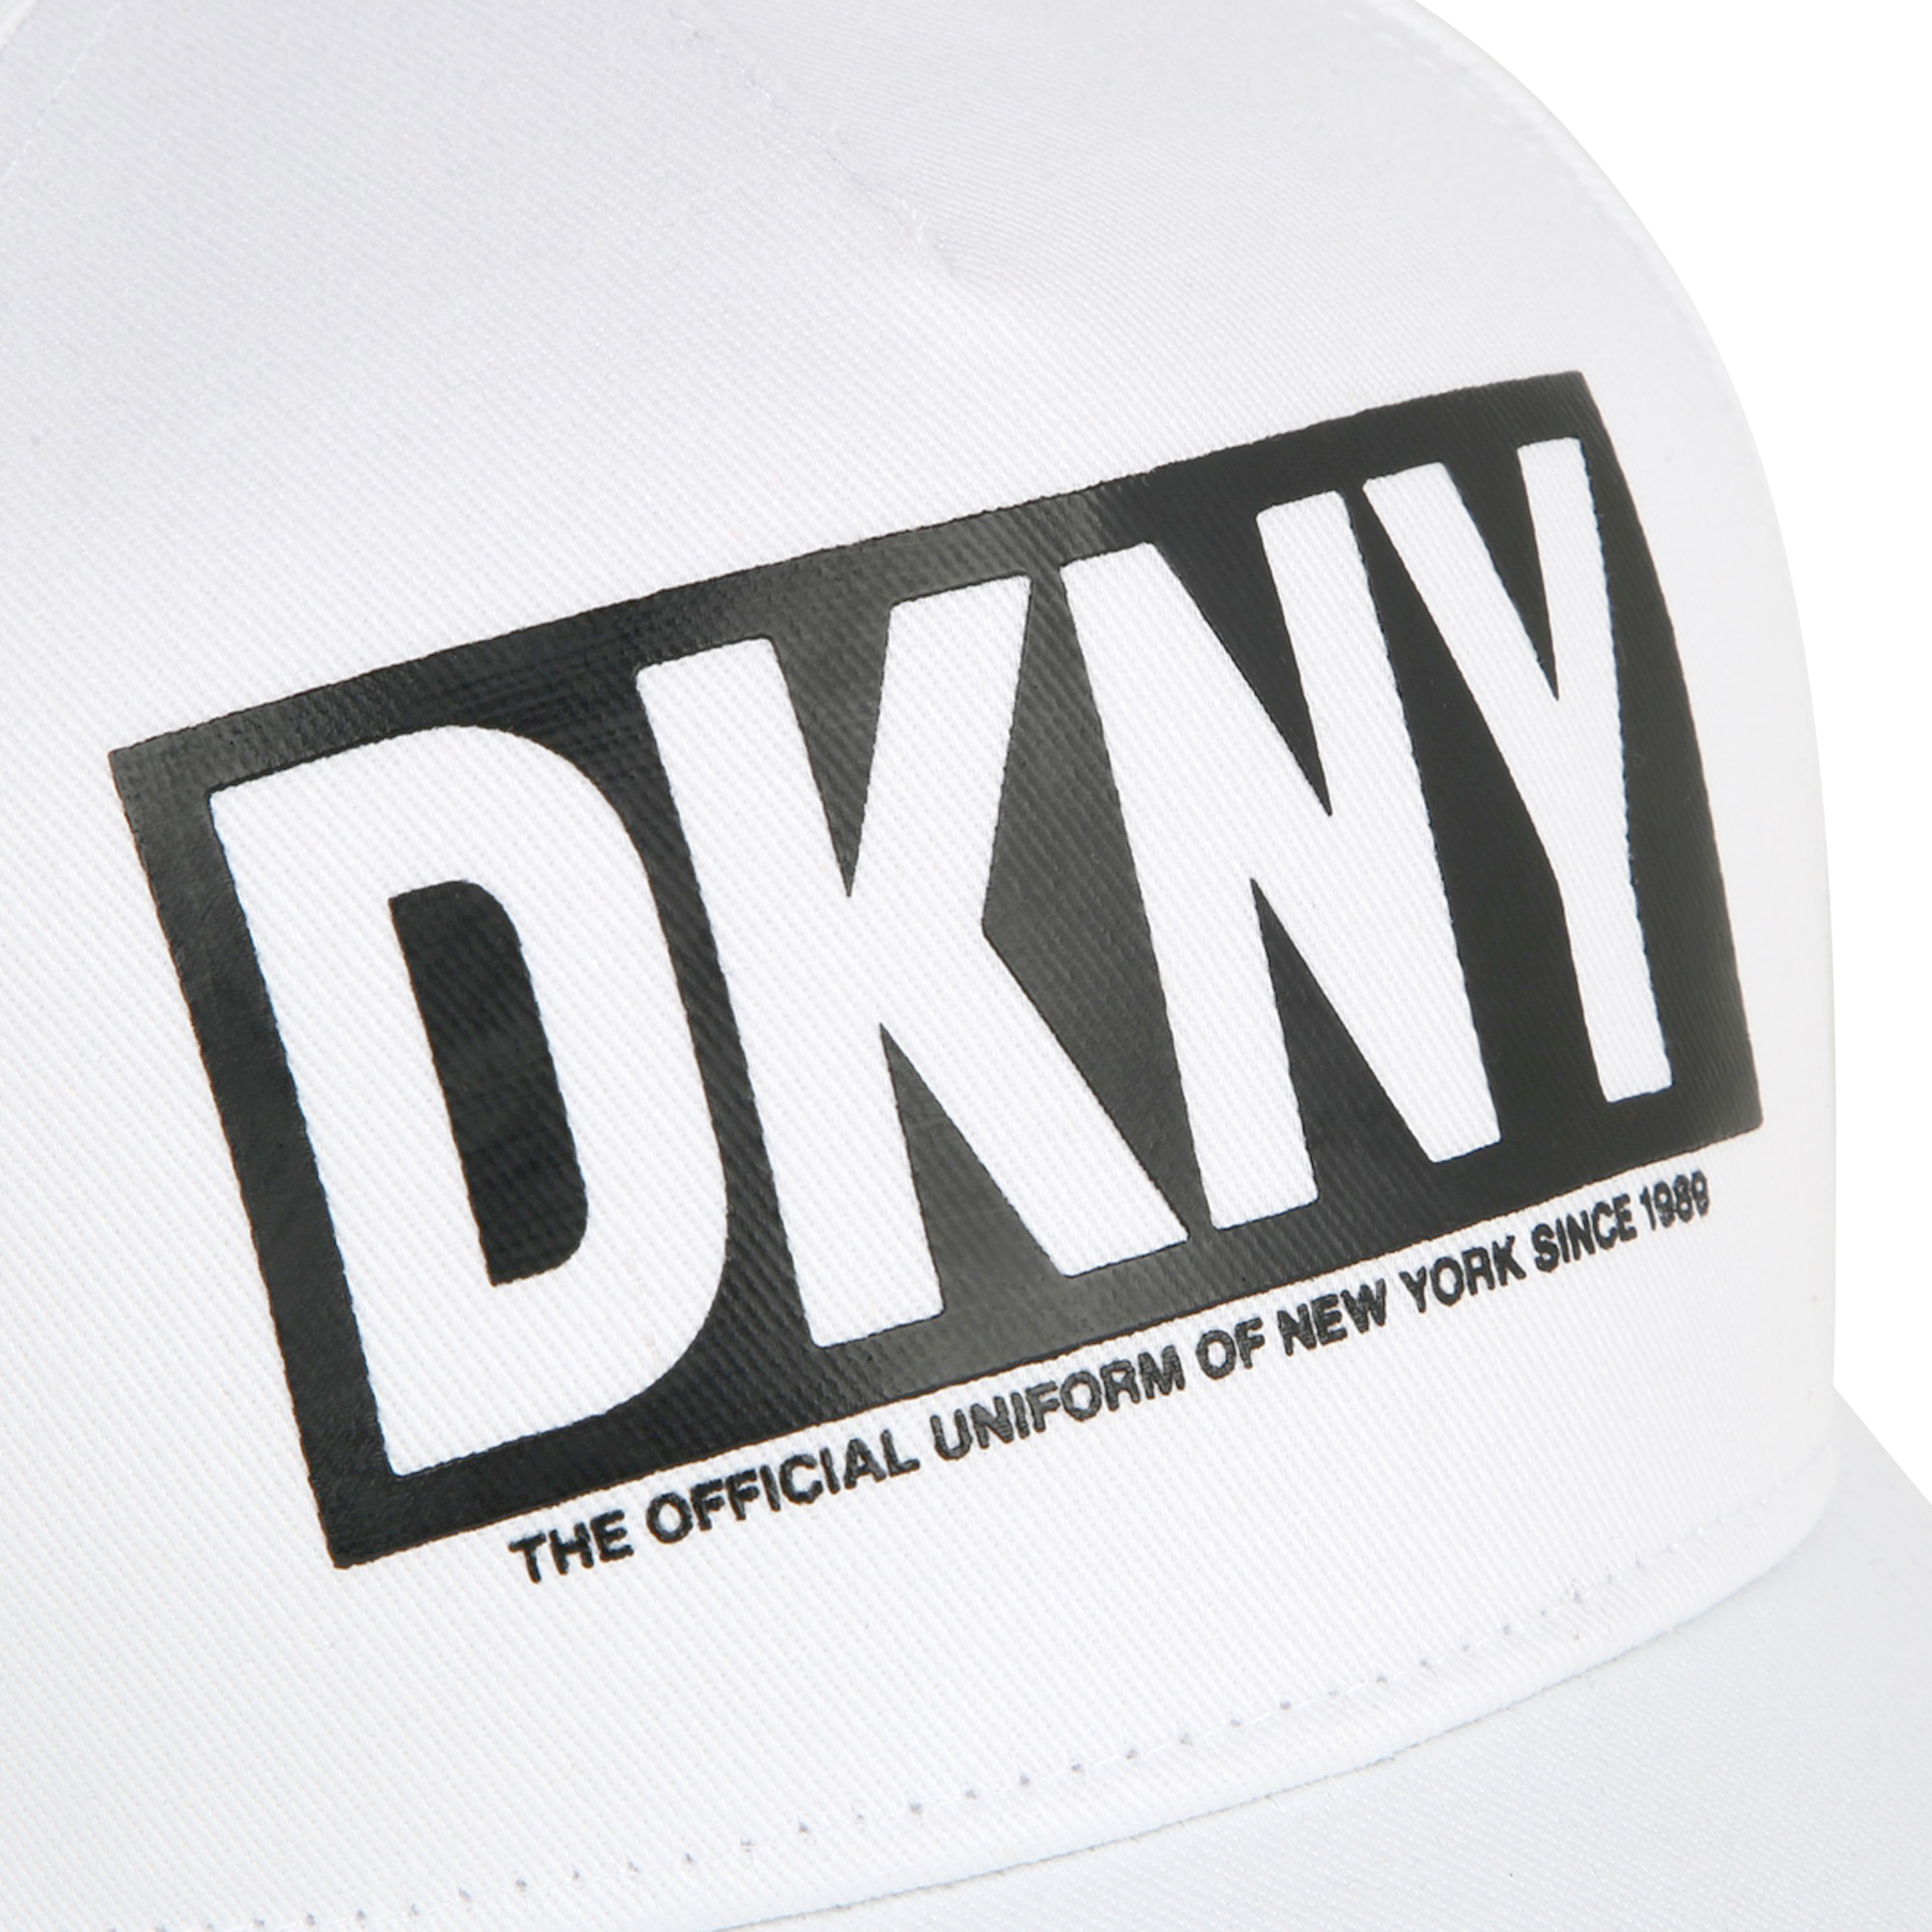 Kappe mit Logo DKNY Für UNISEX